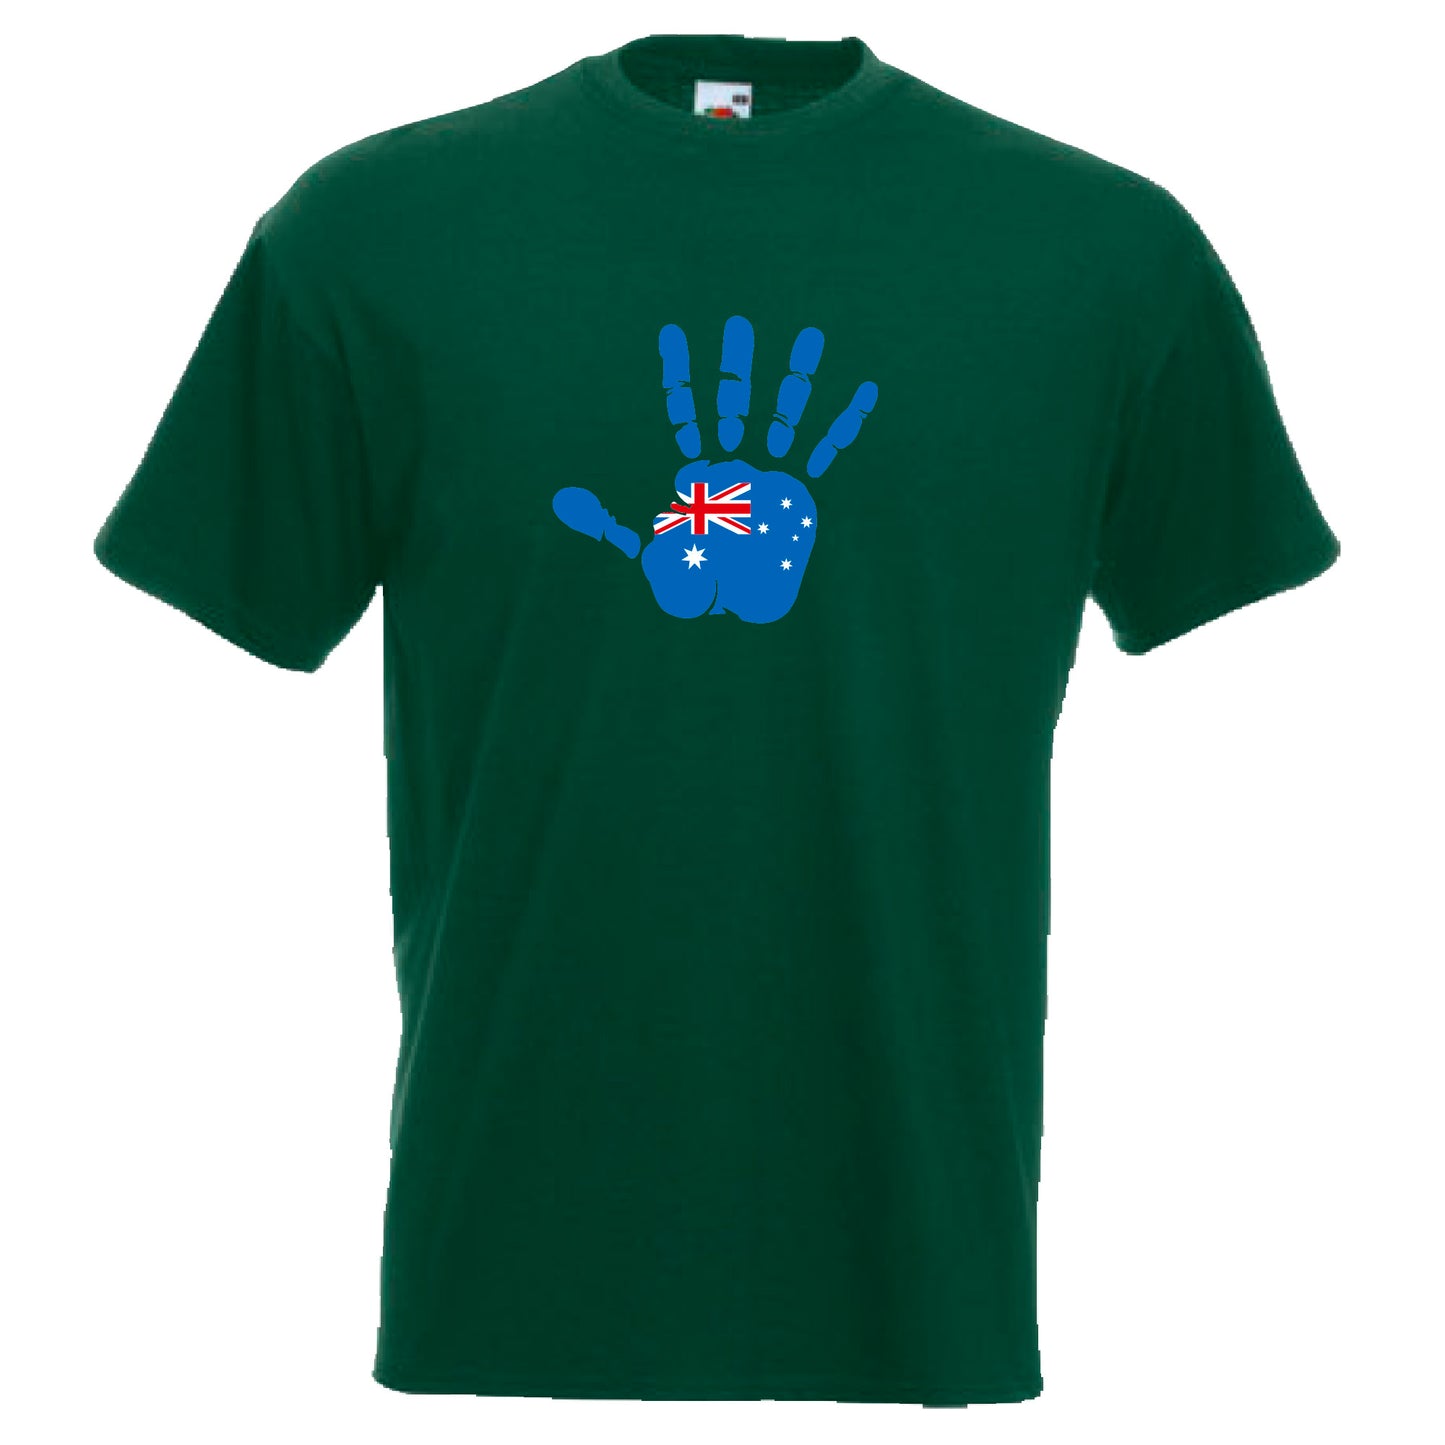 INDIGOS UG - T-Shirt Herren - Australien - Hand - Fussball